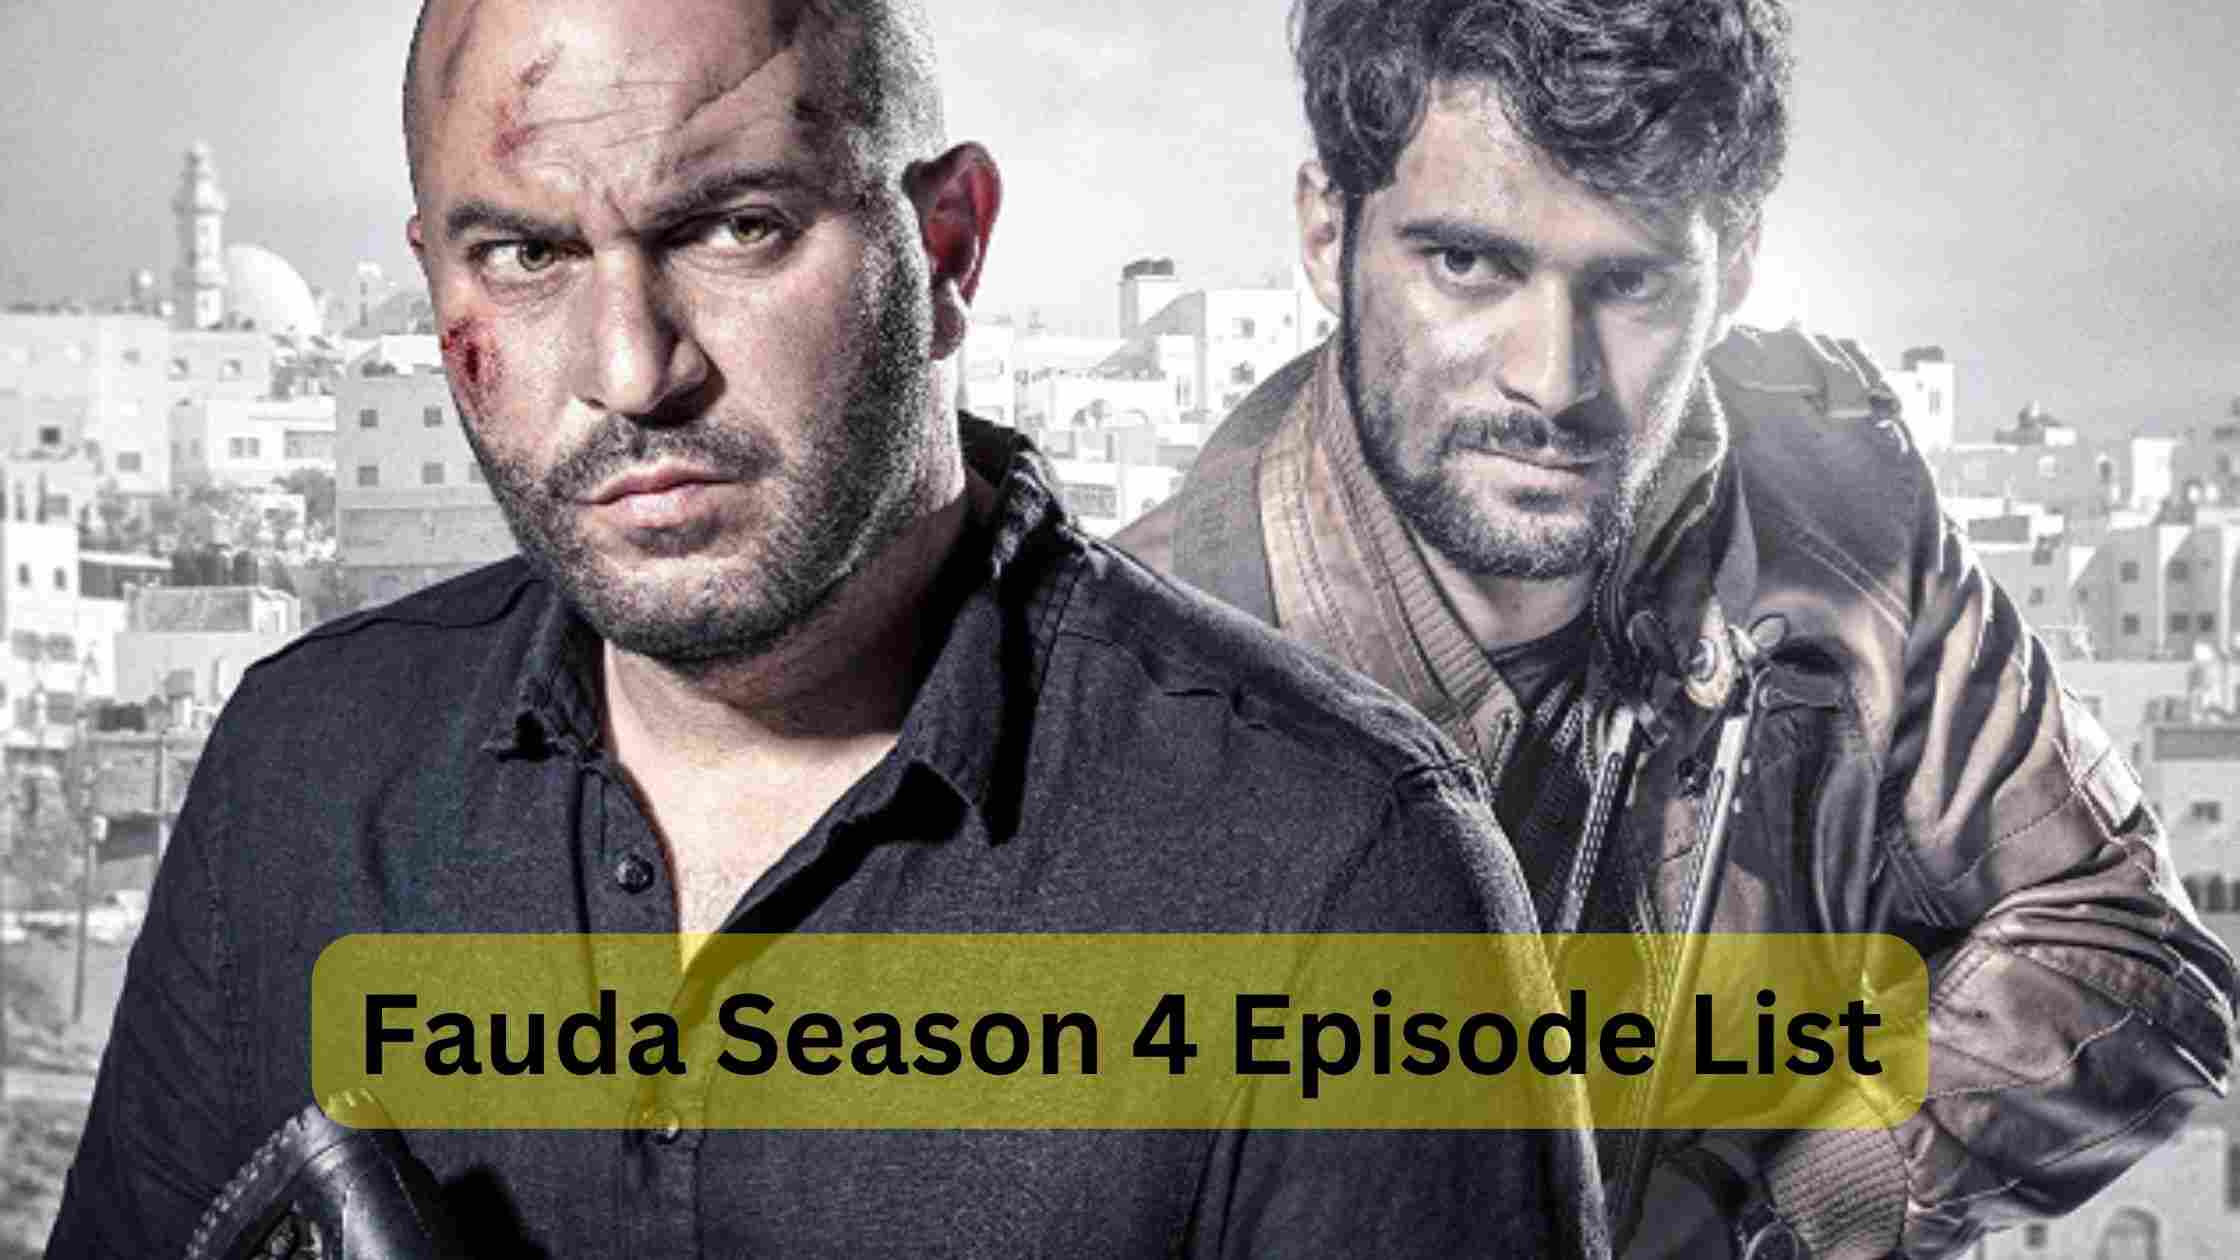 Fauda season 4 Episode list